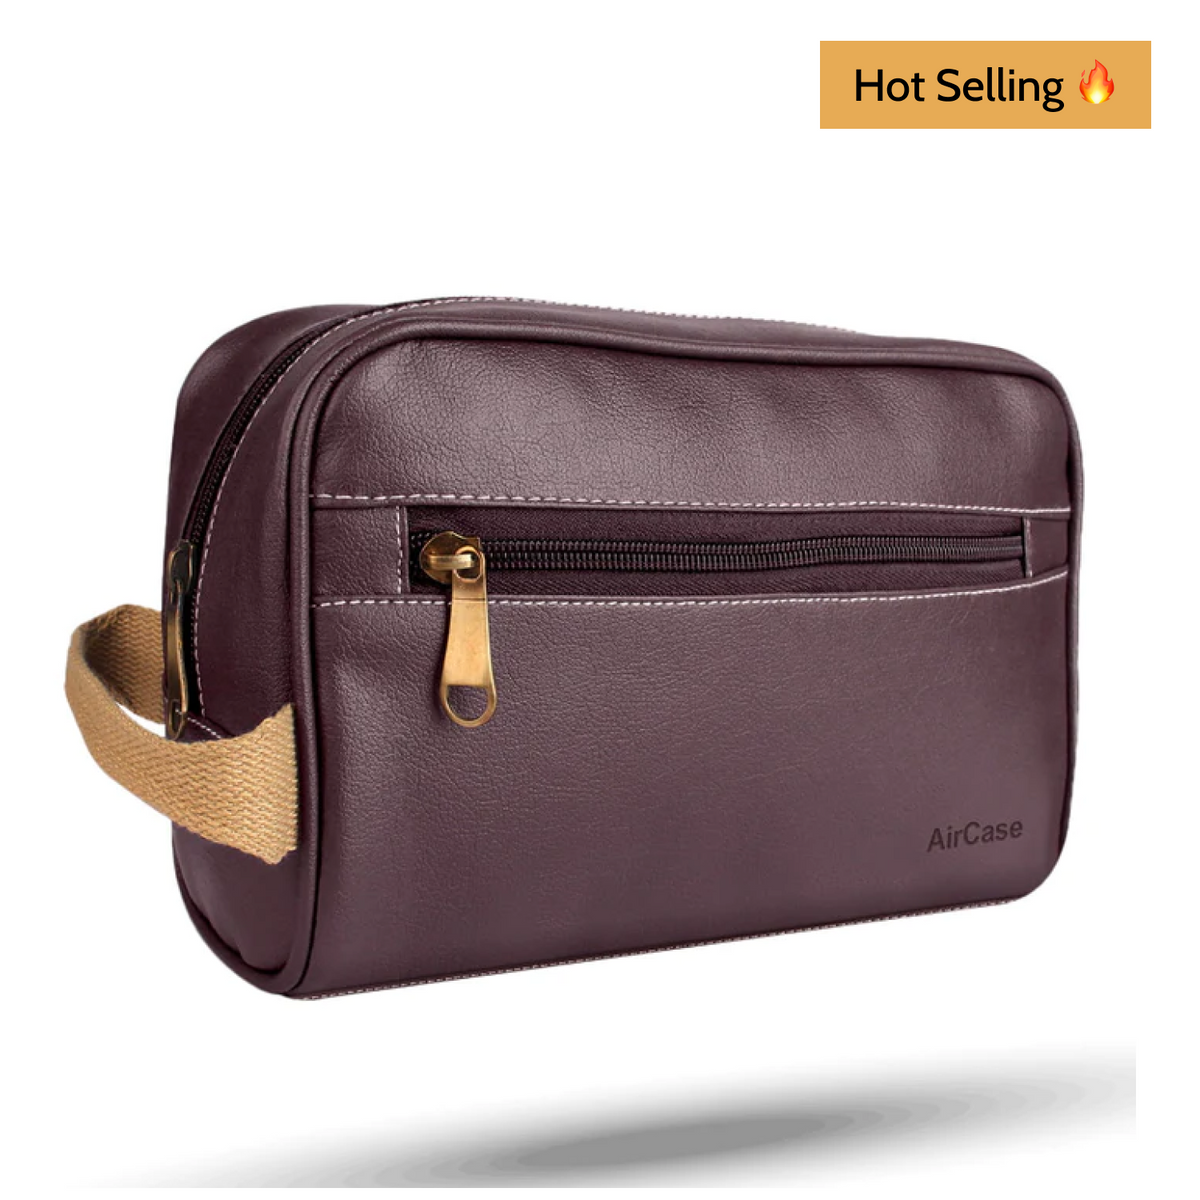 Buy Handbag Organiser Online In India -  India